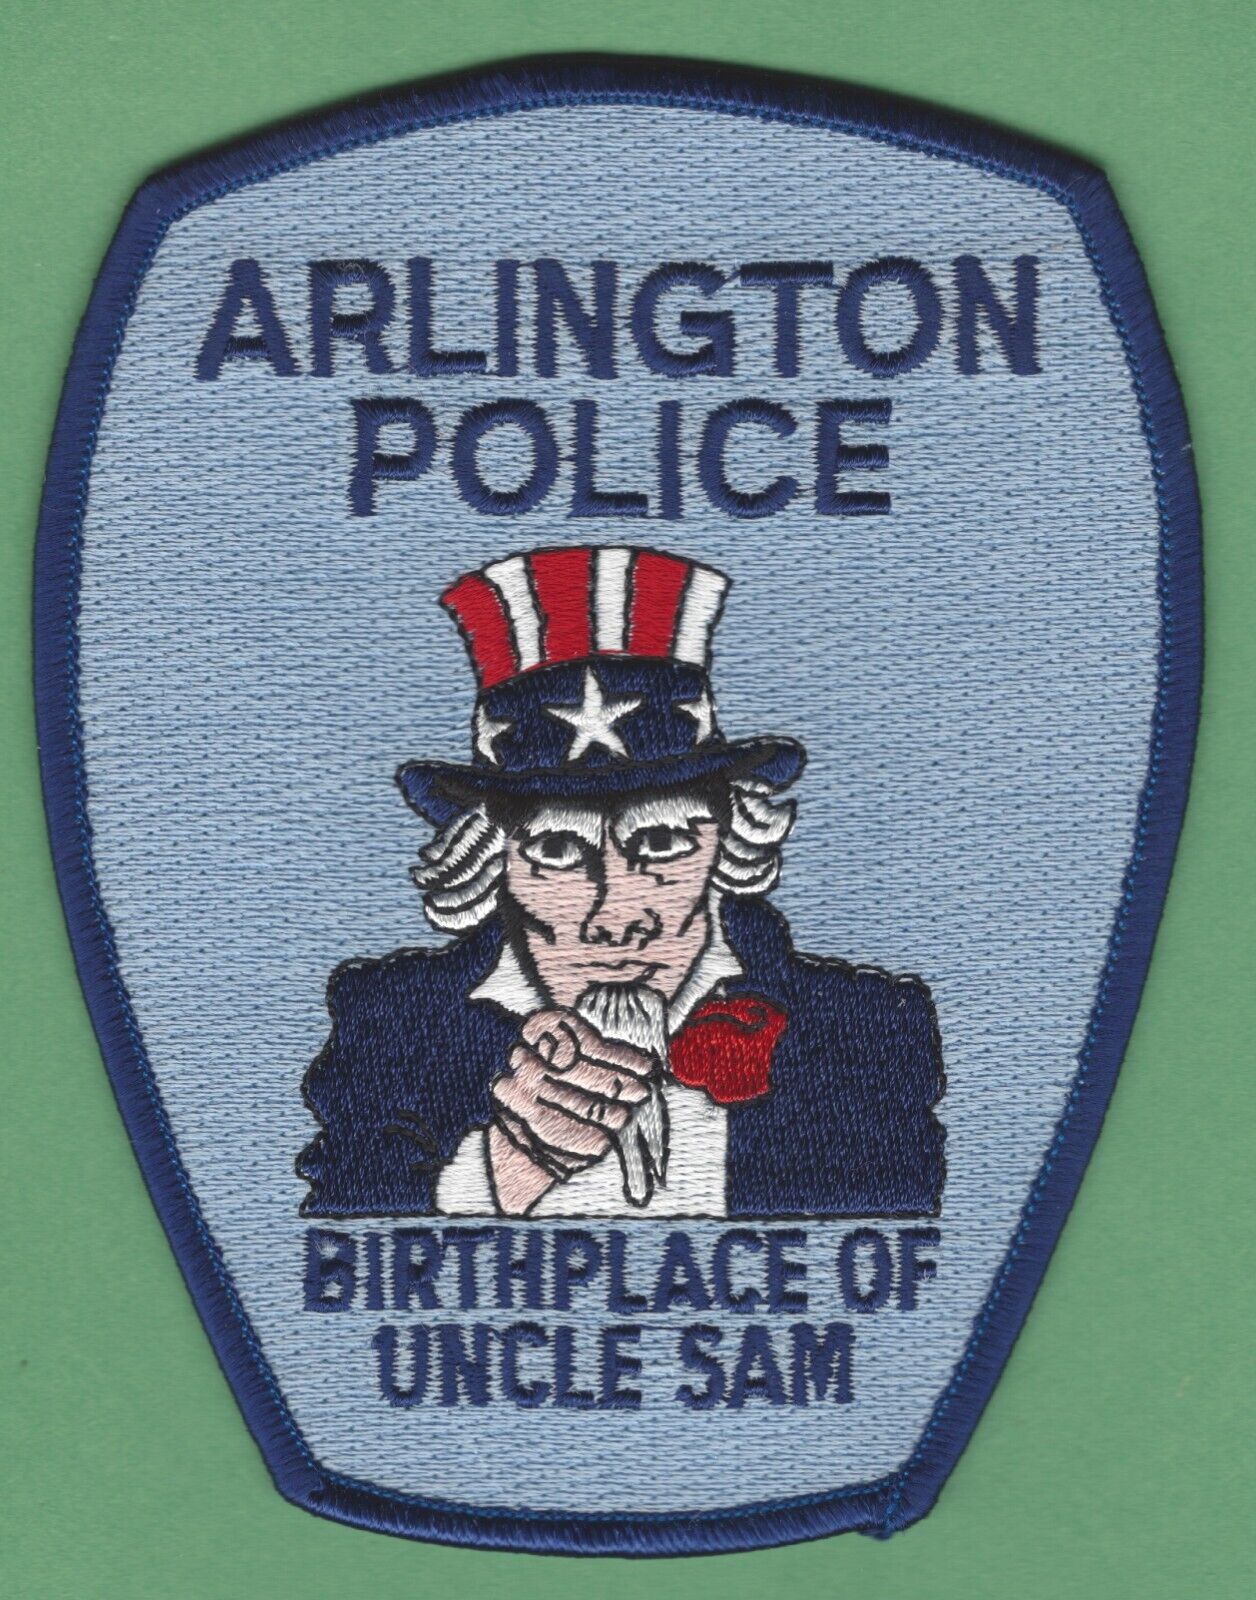 ARLINGTON MASSACHUSETTS POLICE PATCH UNCLE SAM